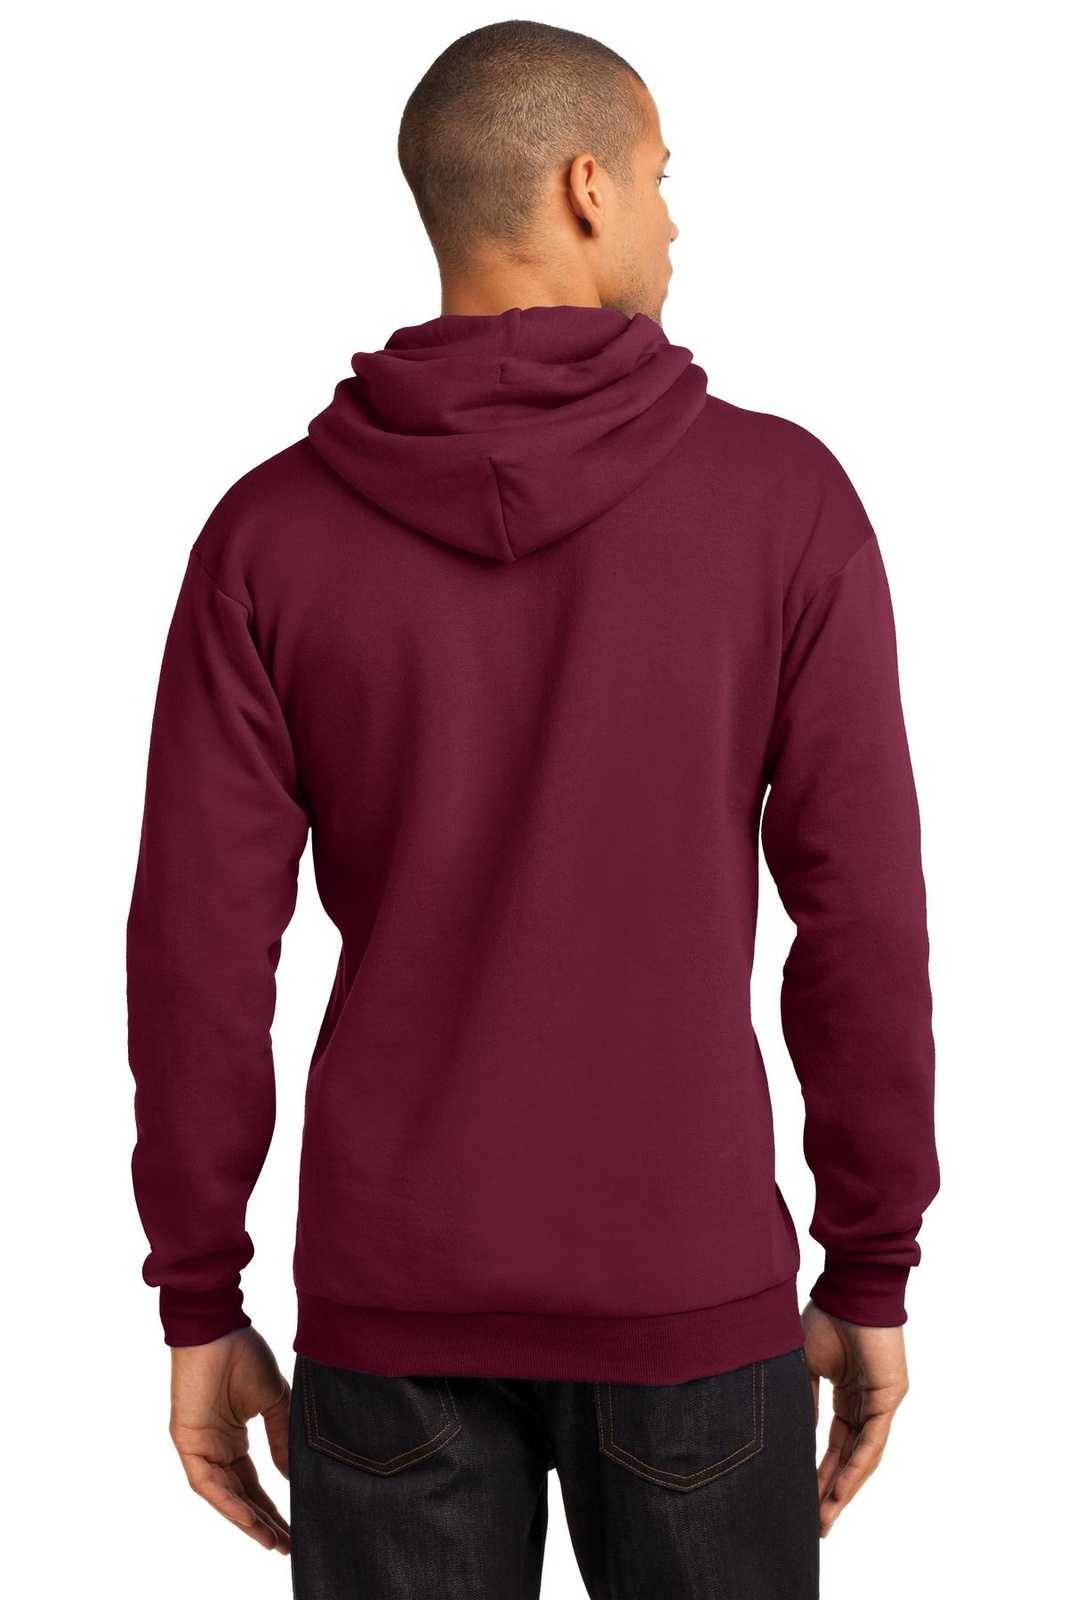 Port &amp; Company PC78H Core Fleece Pullover Hooded Sweatshirt - Cardinal - HIT a Double - 2